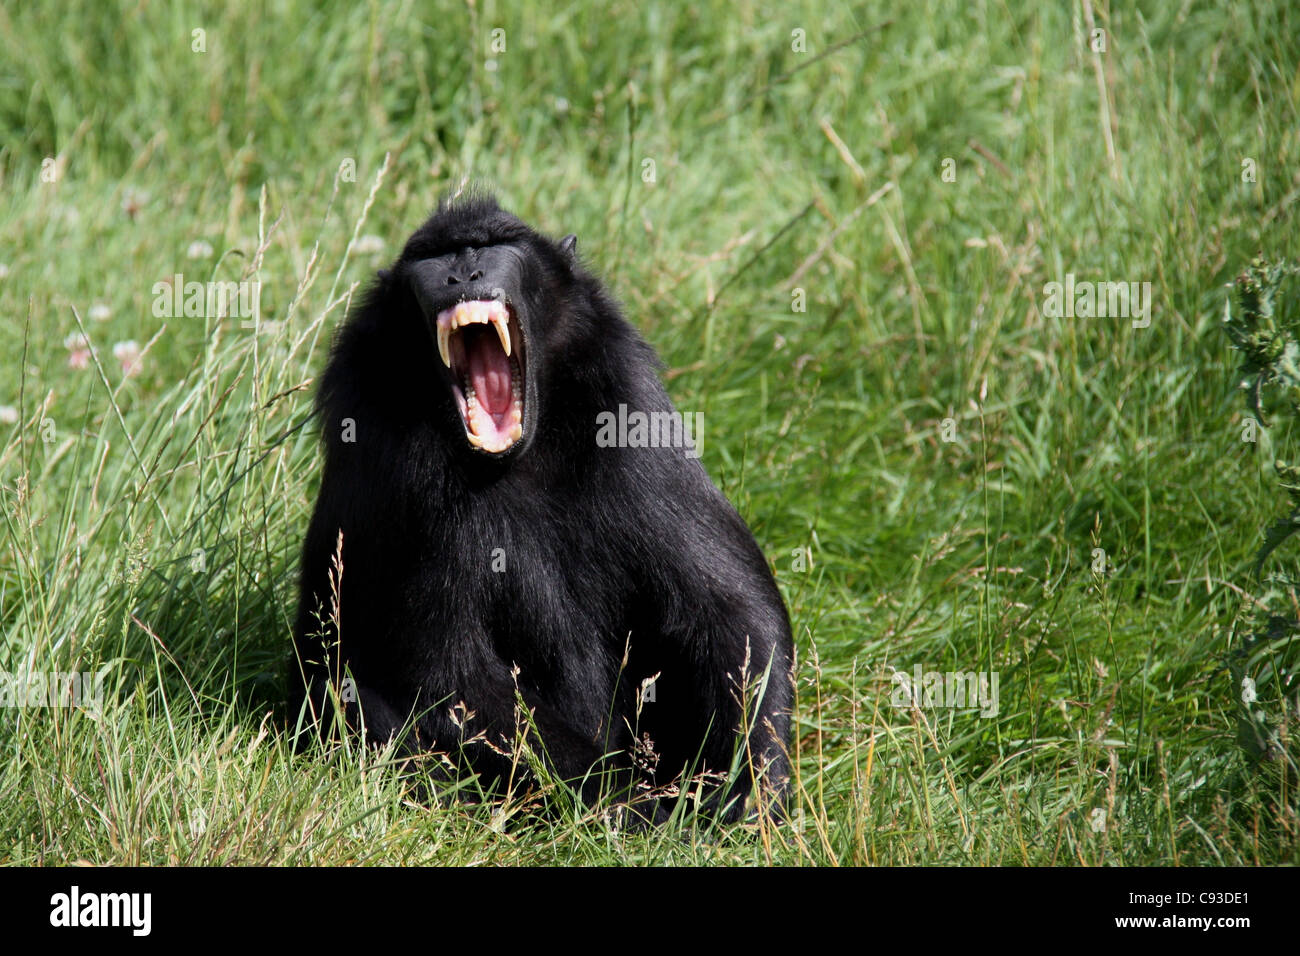 Sulawesi Crested Macaque, black monkey Stock Photo